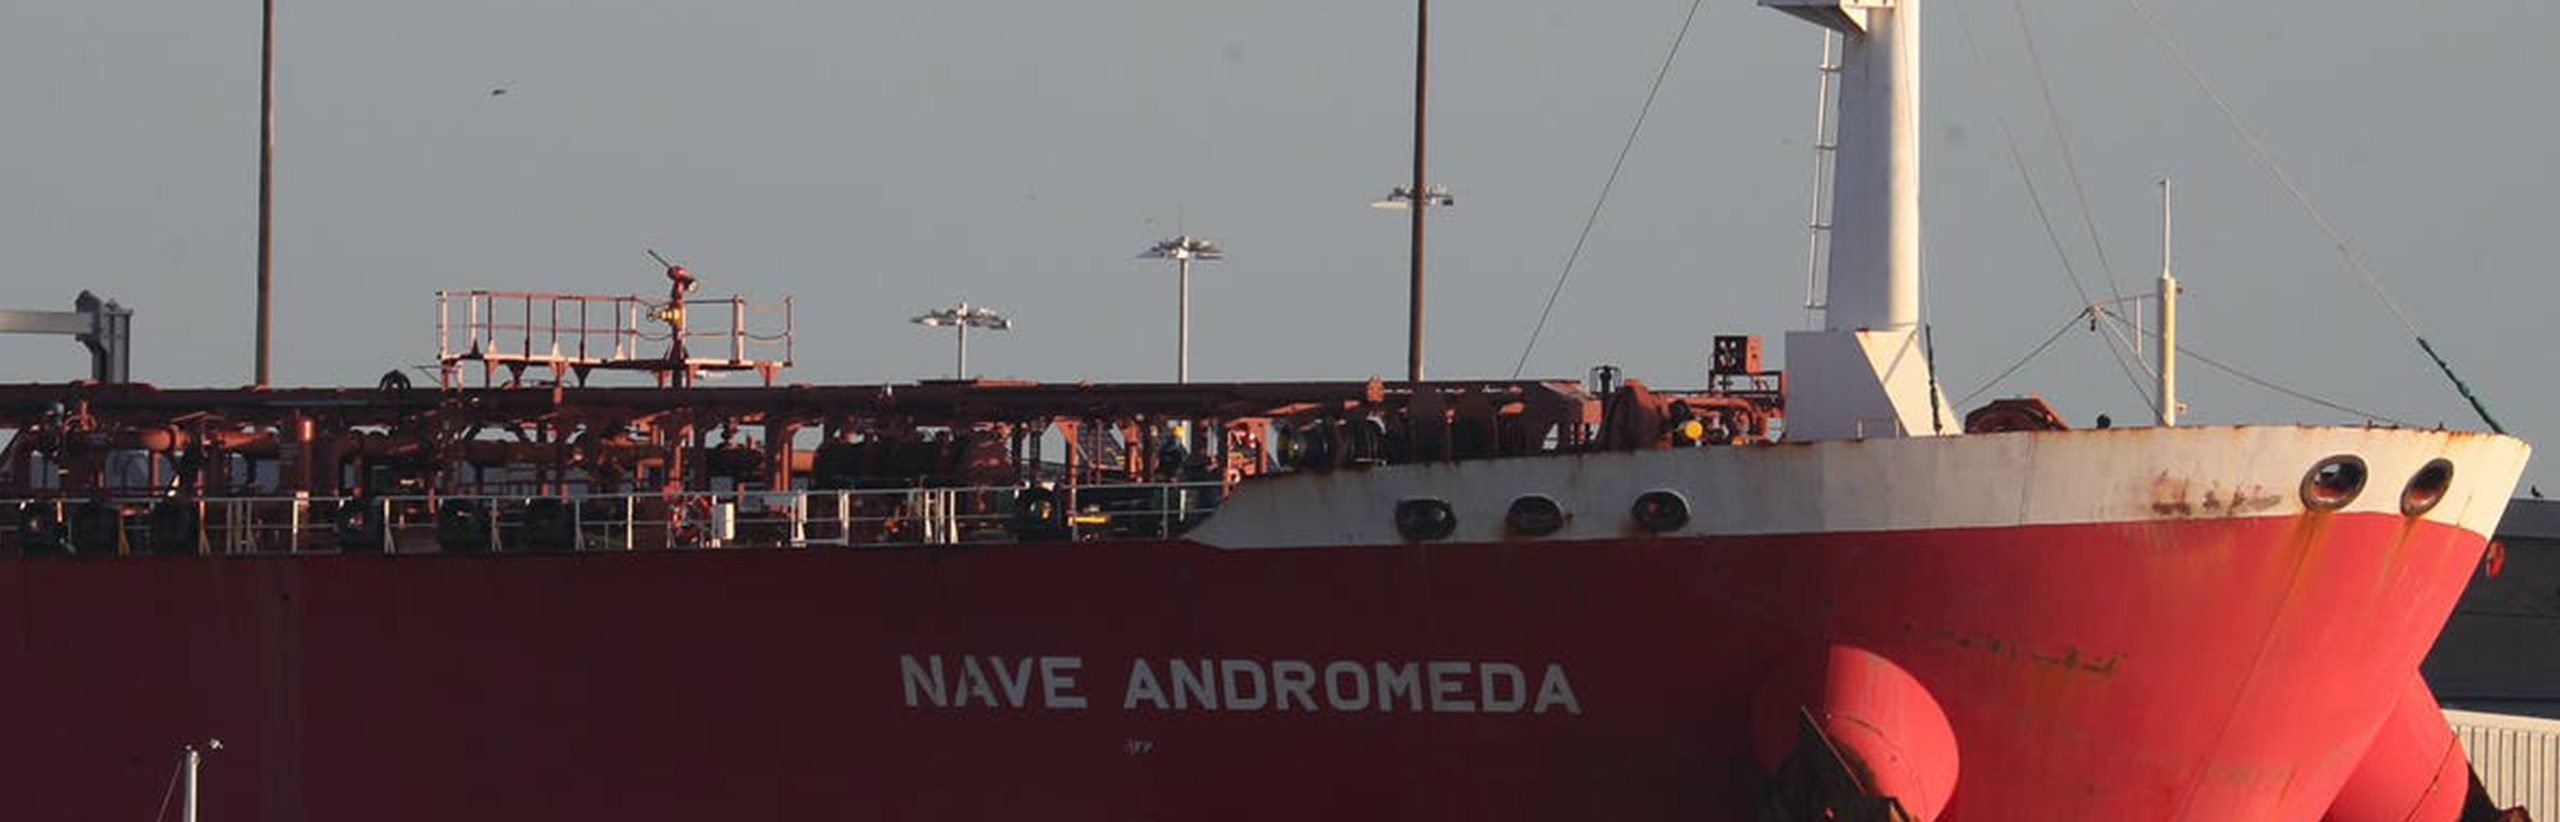 seafarers-hijacked-tanker-Nave-Andromeda-mental-health